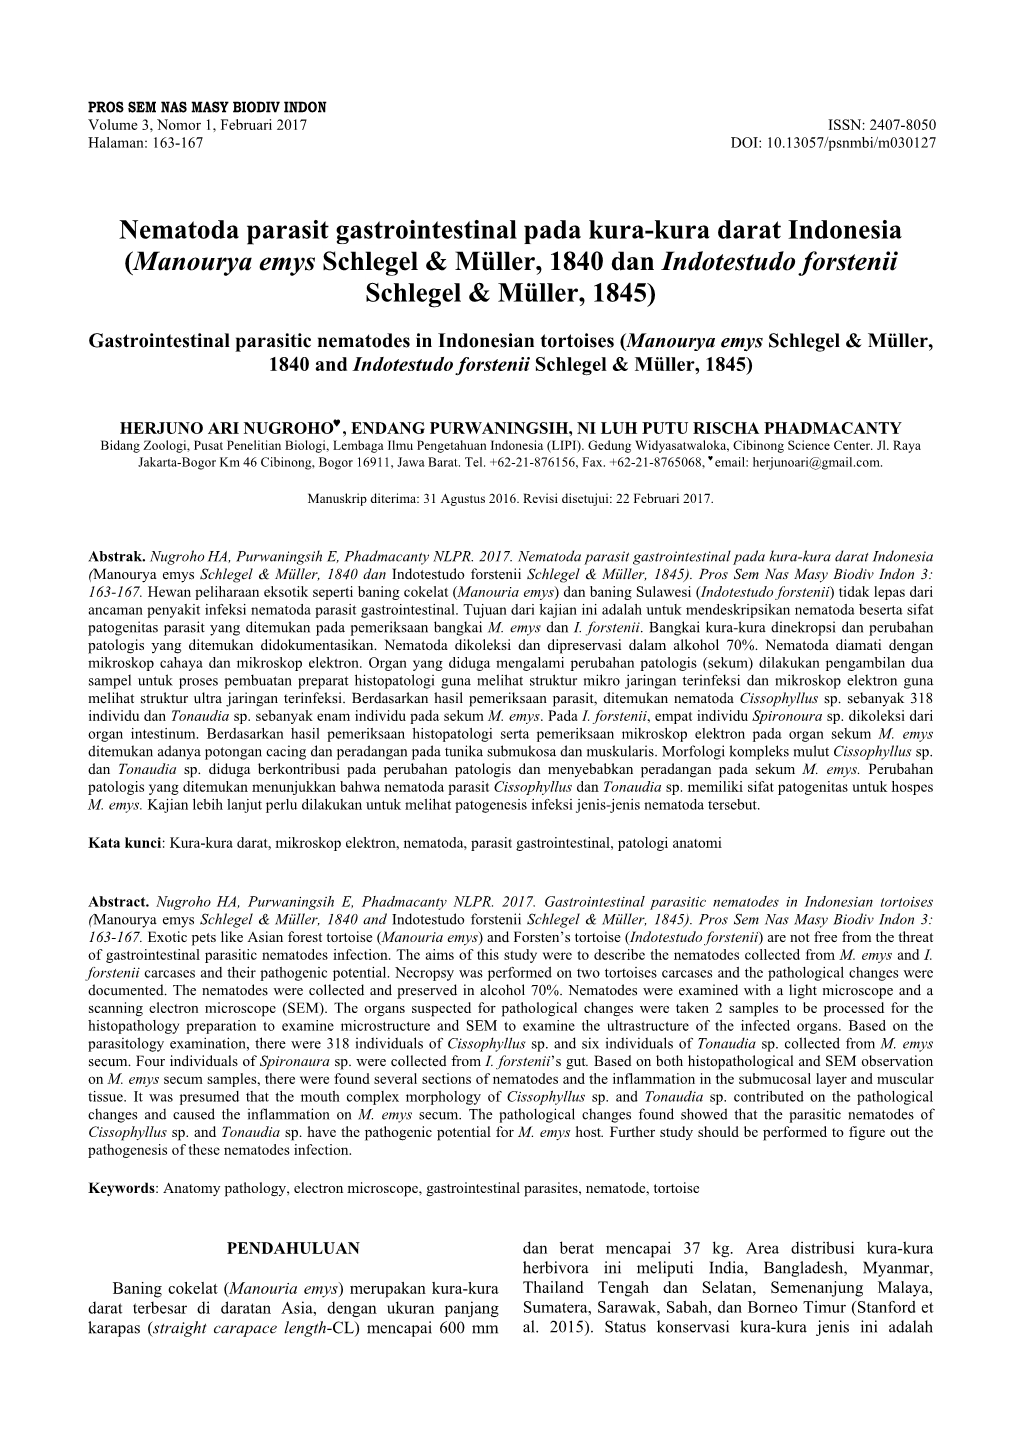 Nematoda Parasit Gastrointestinal Pada Kura-Kura Darat Indonesia (Manourya Emys Schlegel & Müller, 1840 Dan Indotestudo